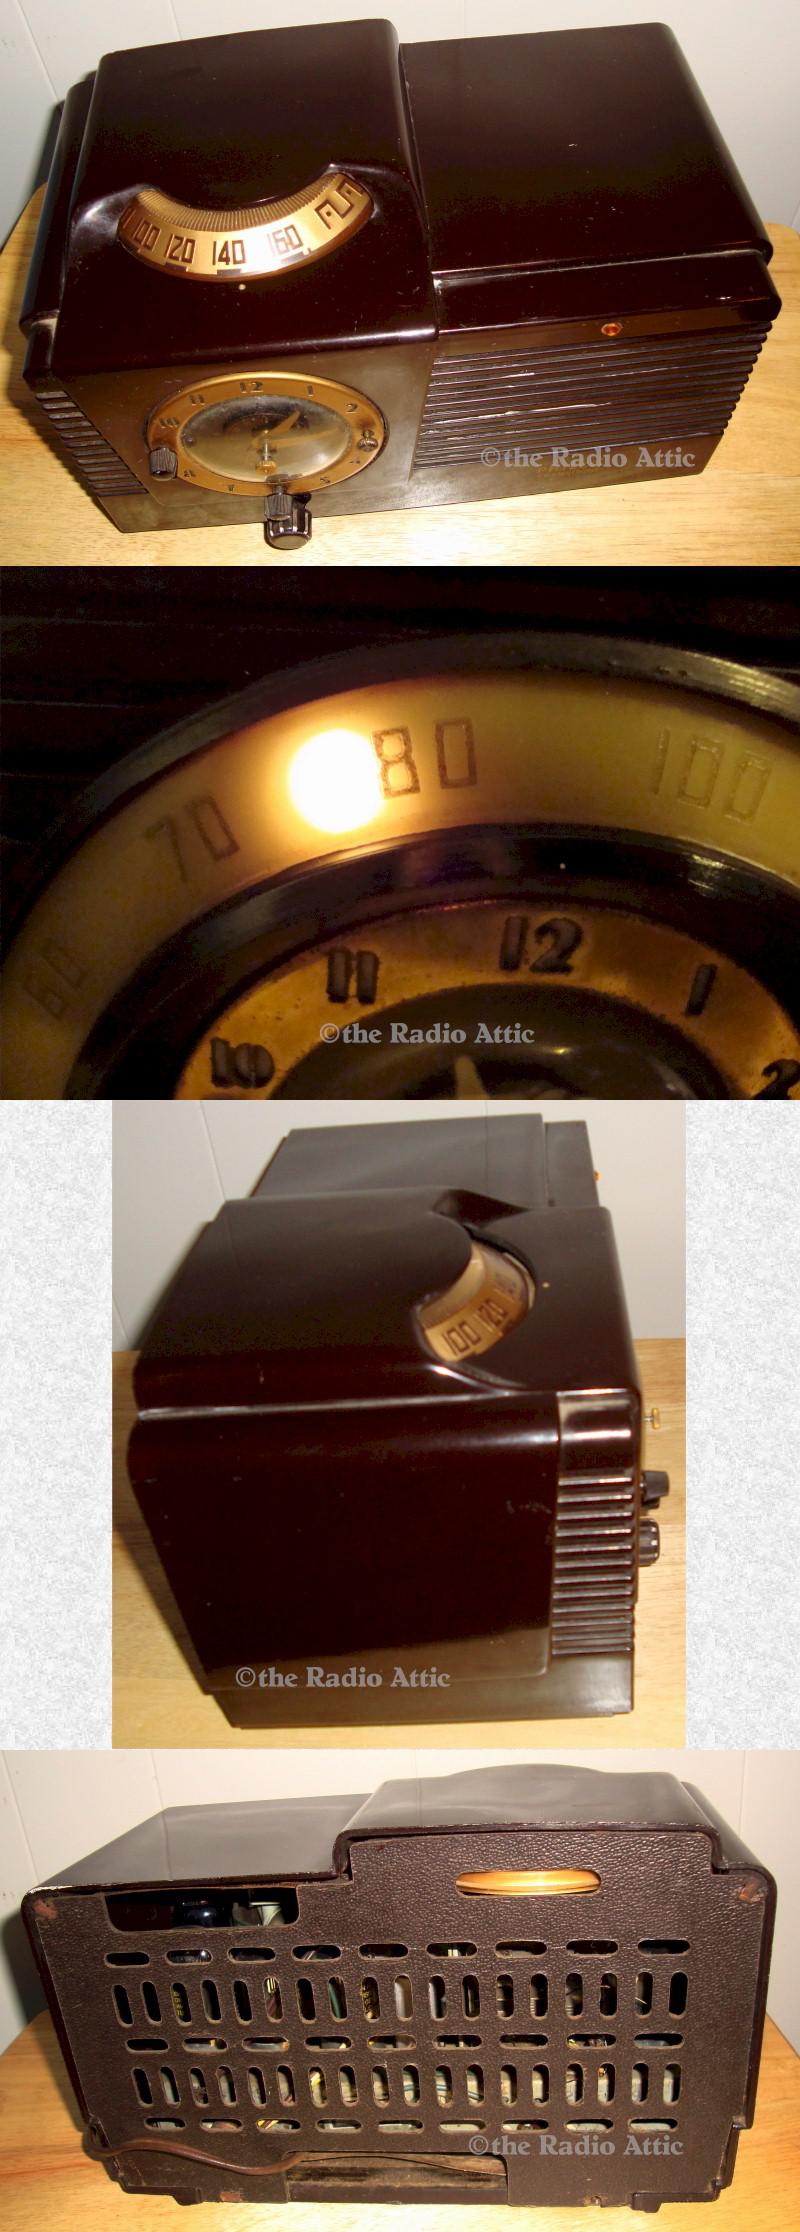 Philco 50-527 Clock Radio (1950)